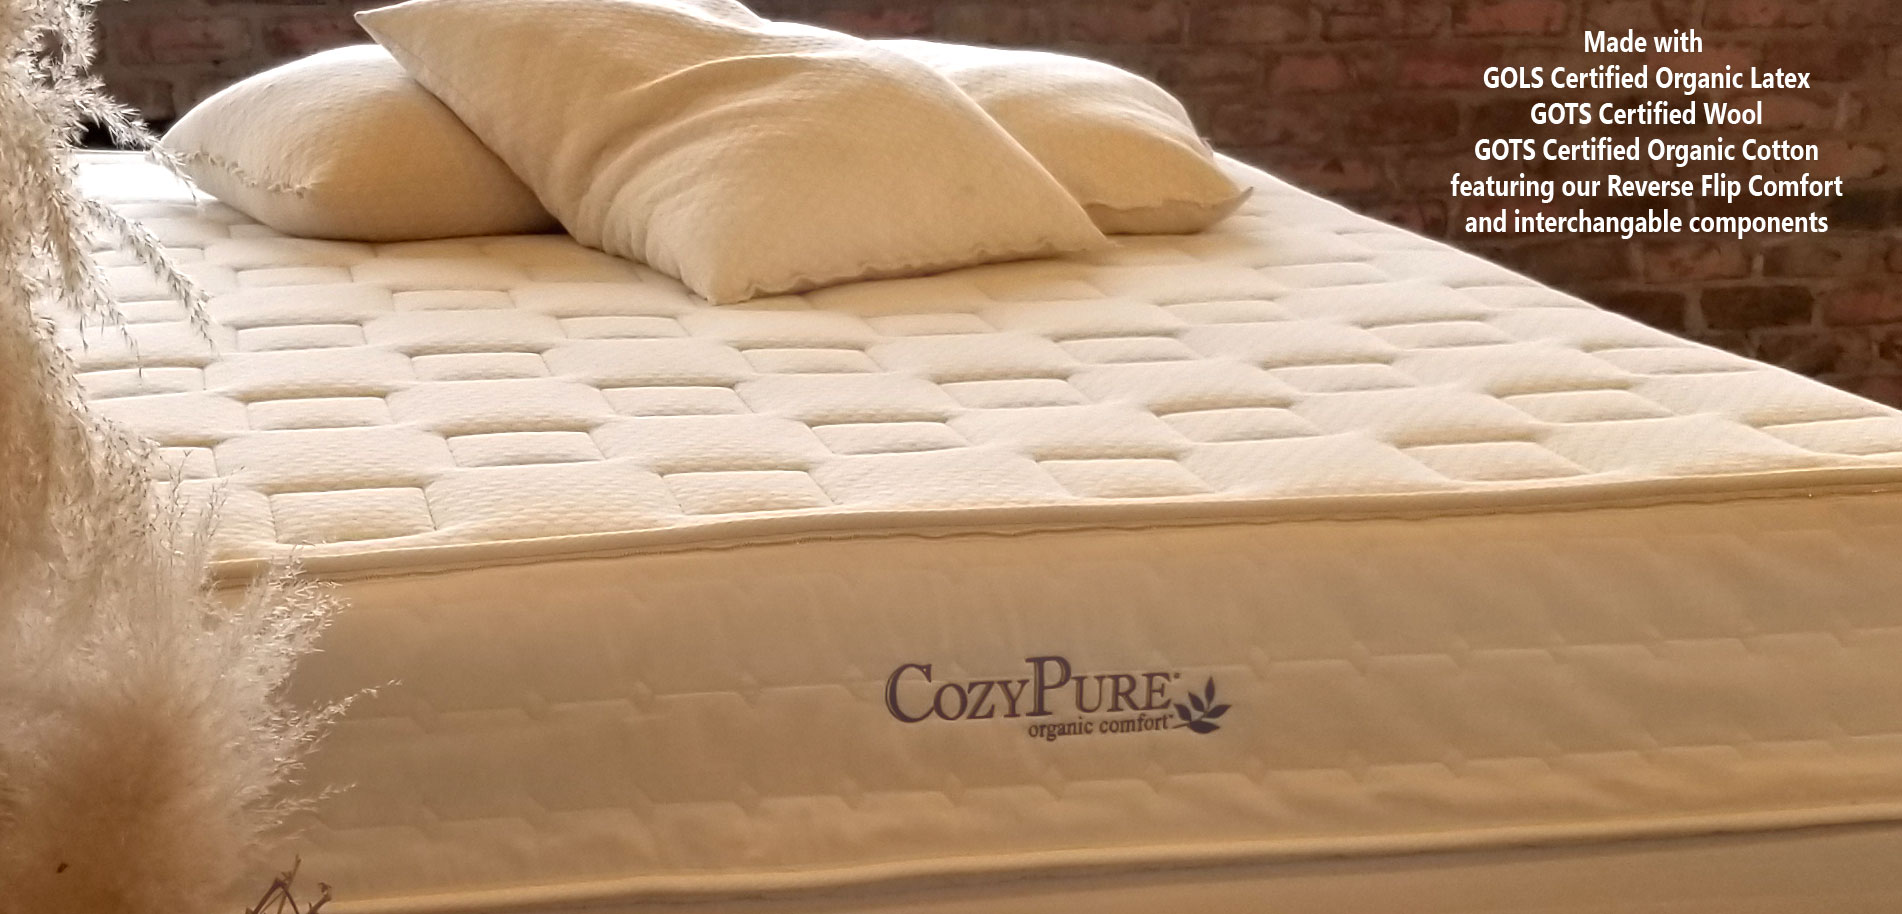 CozyPure organic latex mattress review